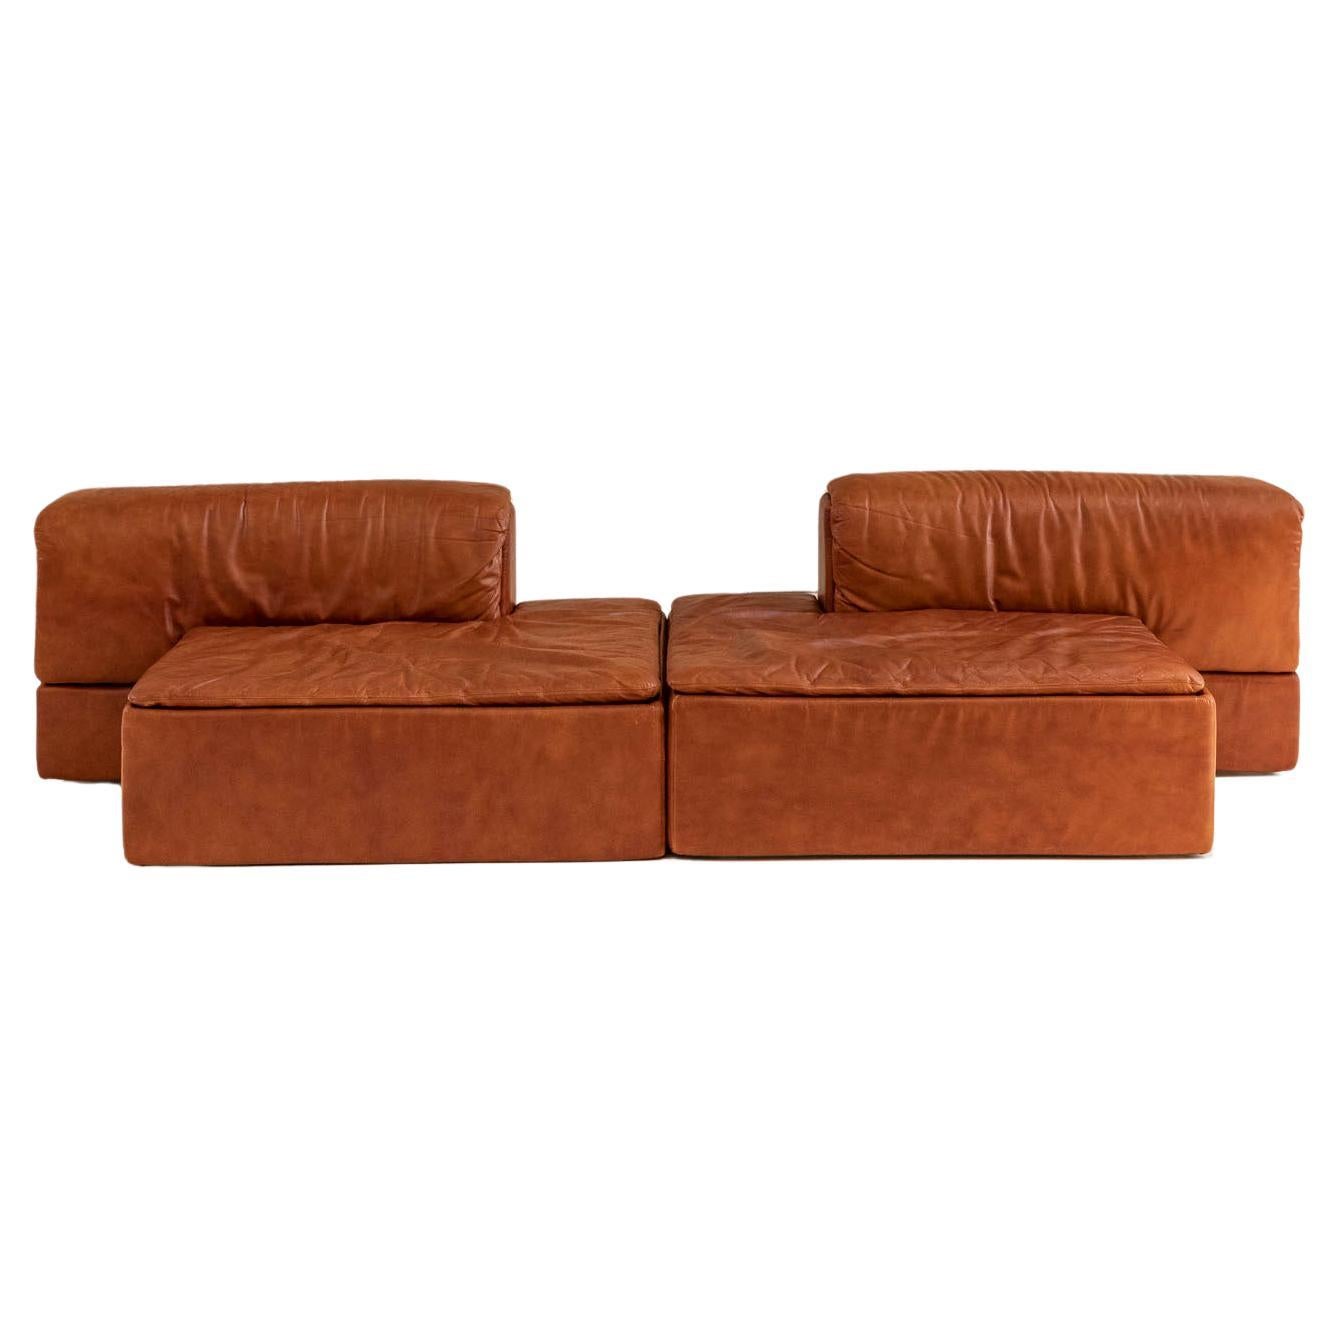 Modular Leather Sofas by Claudio Salocchi for Sormani